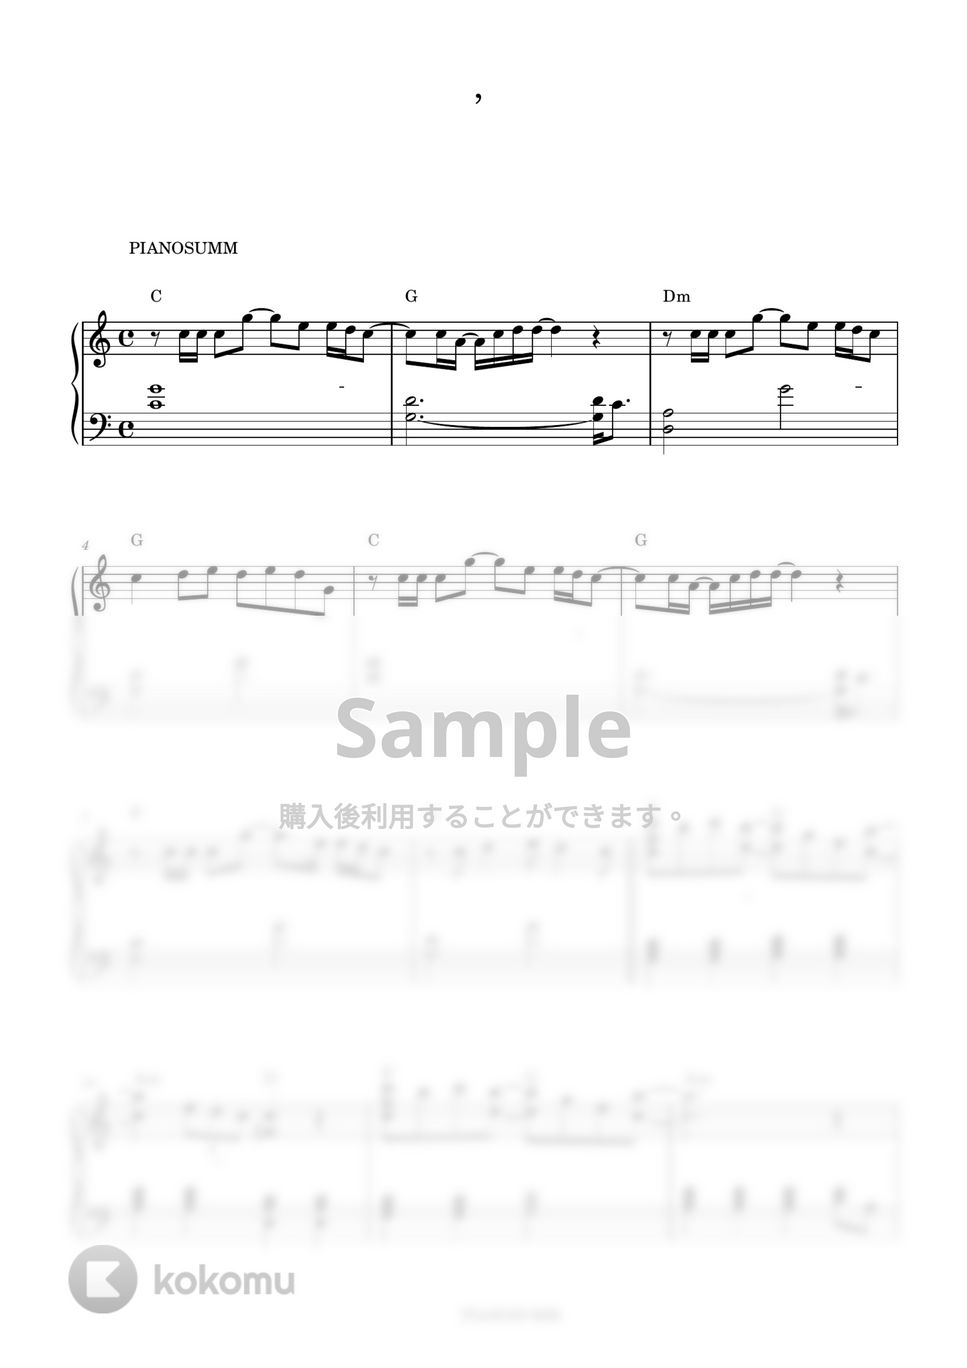 Jaurim(자우림) - Twenty-five, Twenty-one(스물다섯, 스물하나) by PIANOSUMM